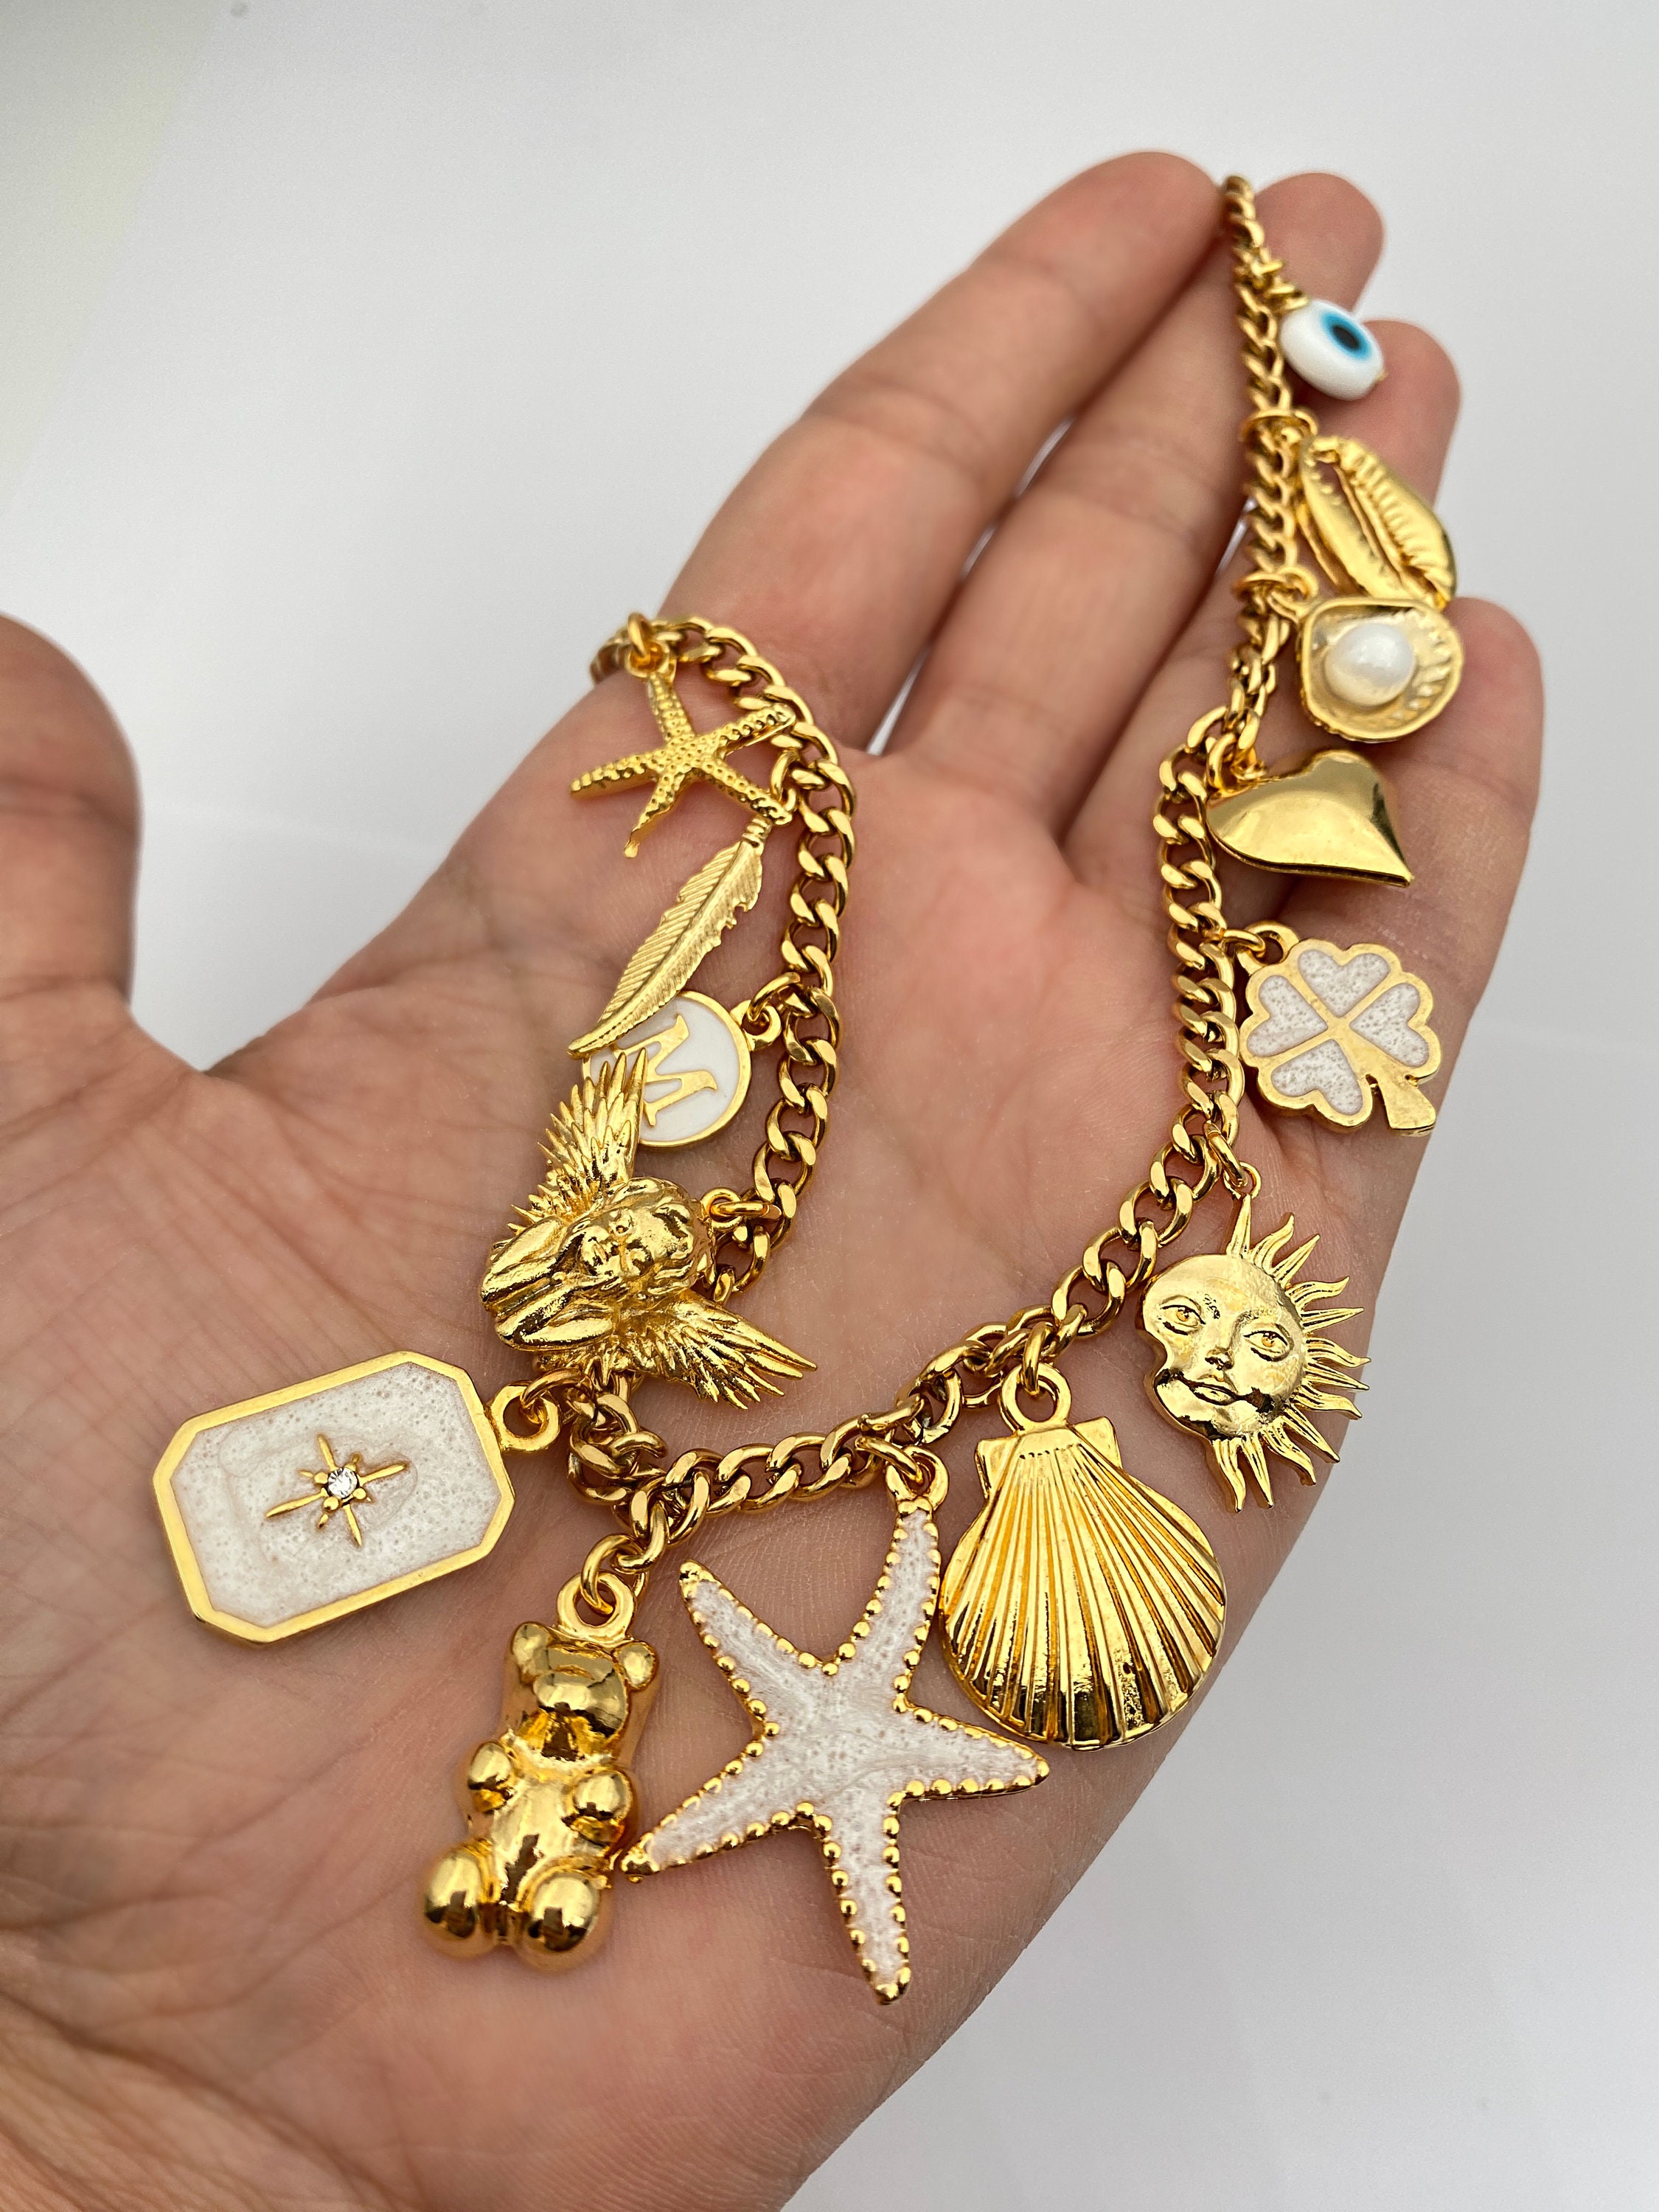 Gold Charm Necklace, Moon Sun Necklace, Multi Charms Bracelet, Half Moon Necklace, Chunky Gold Bracelet, Many Different Charm Necklace